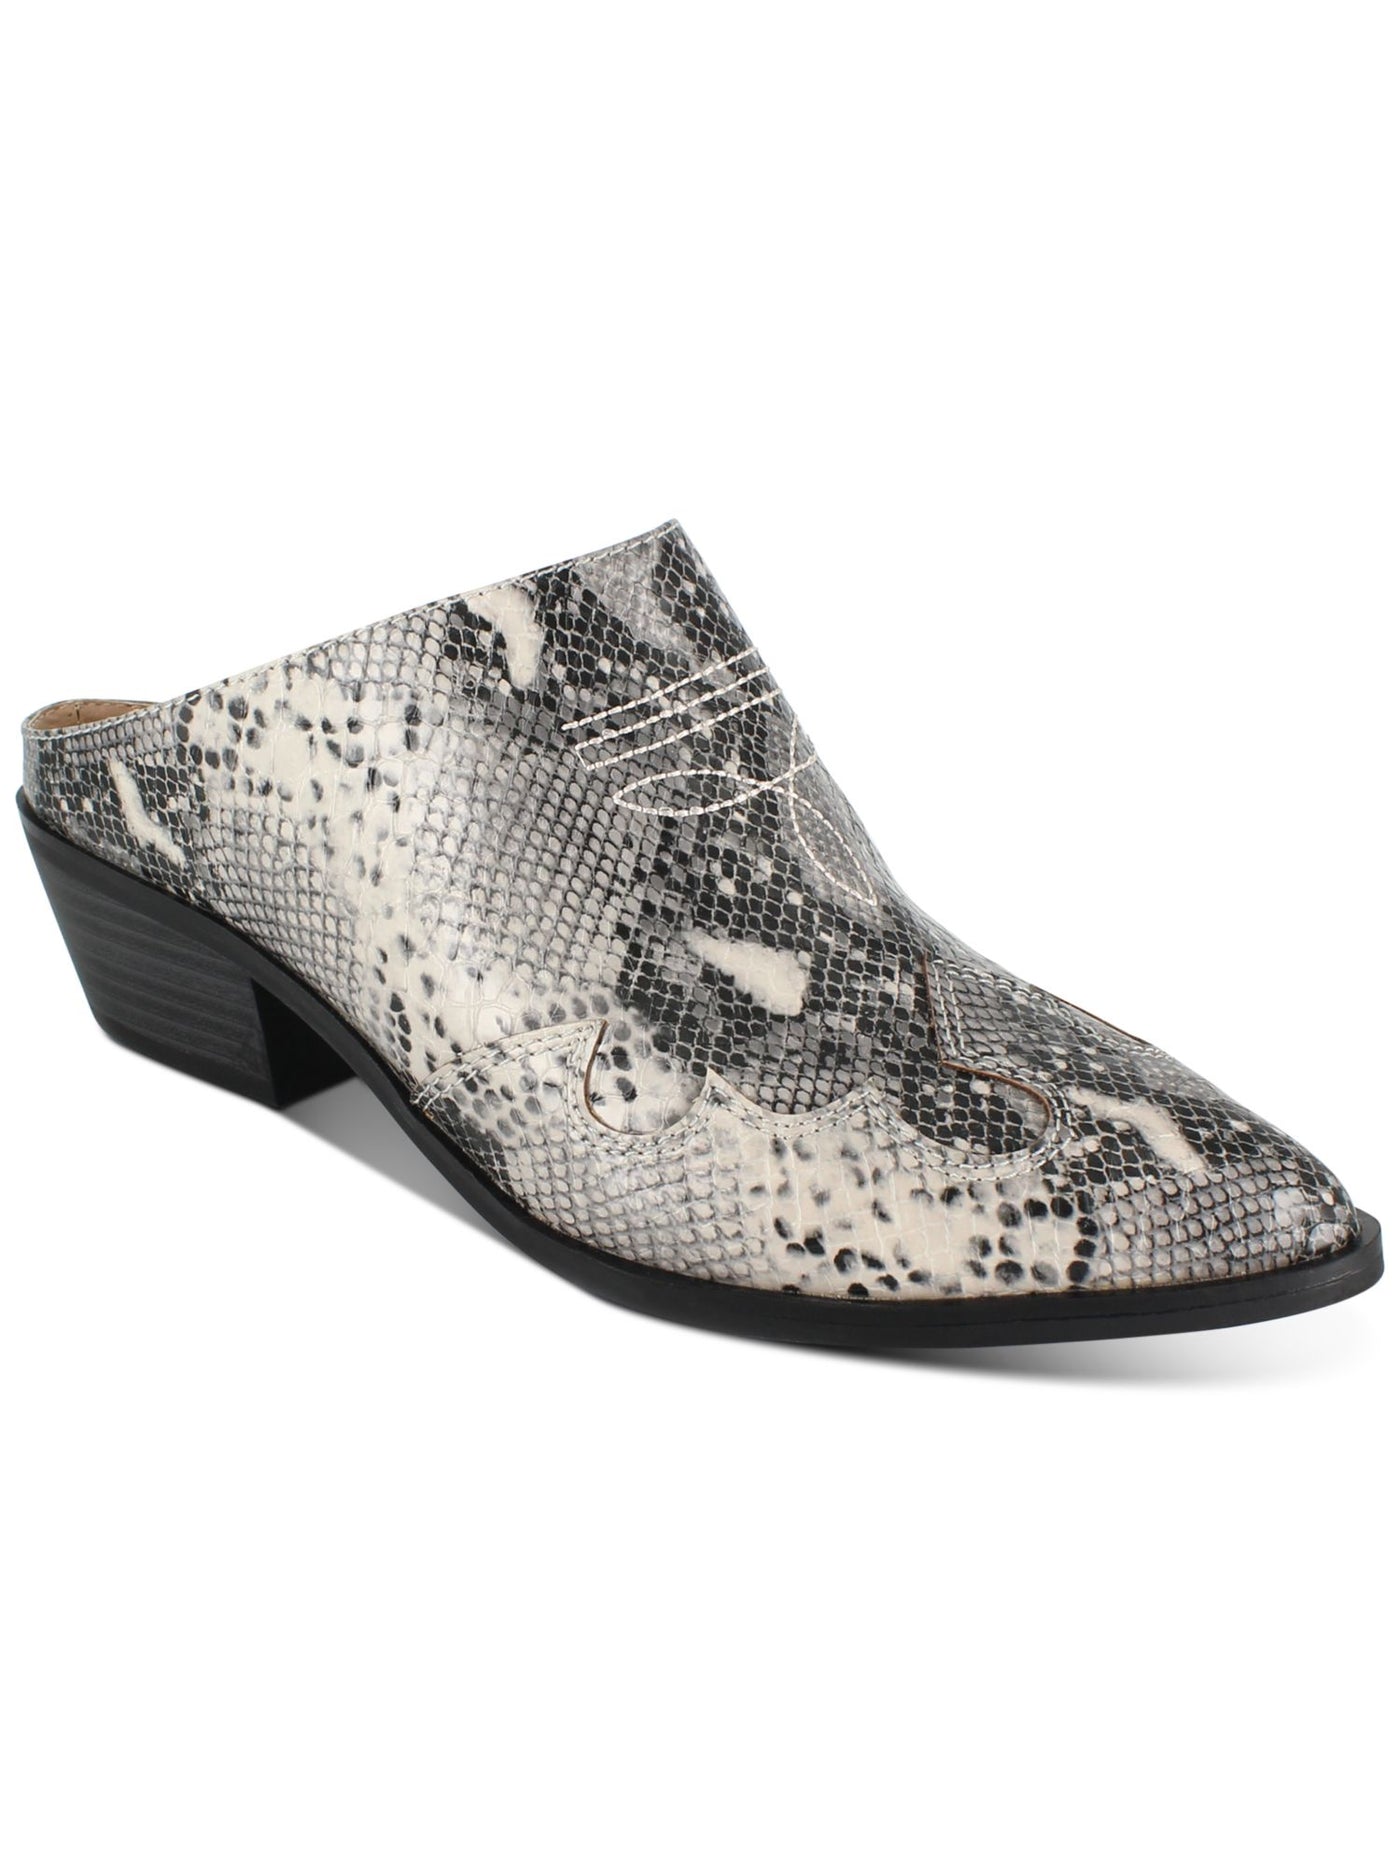 ESPRIT Womens Gray Snake Side Gore Western Inspired Comfort Diane Almond Toe Block Heel Slip On Dress Heeled Mules Shoes 7.5 M